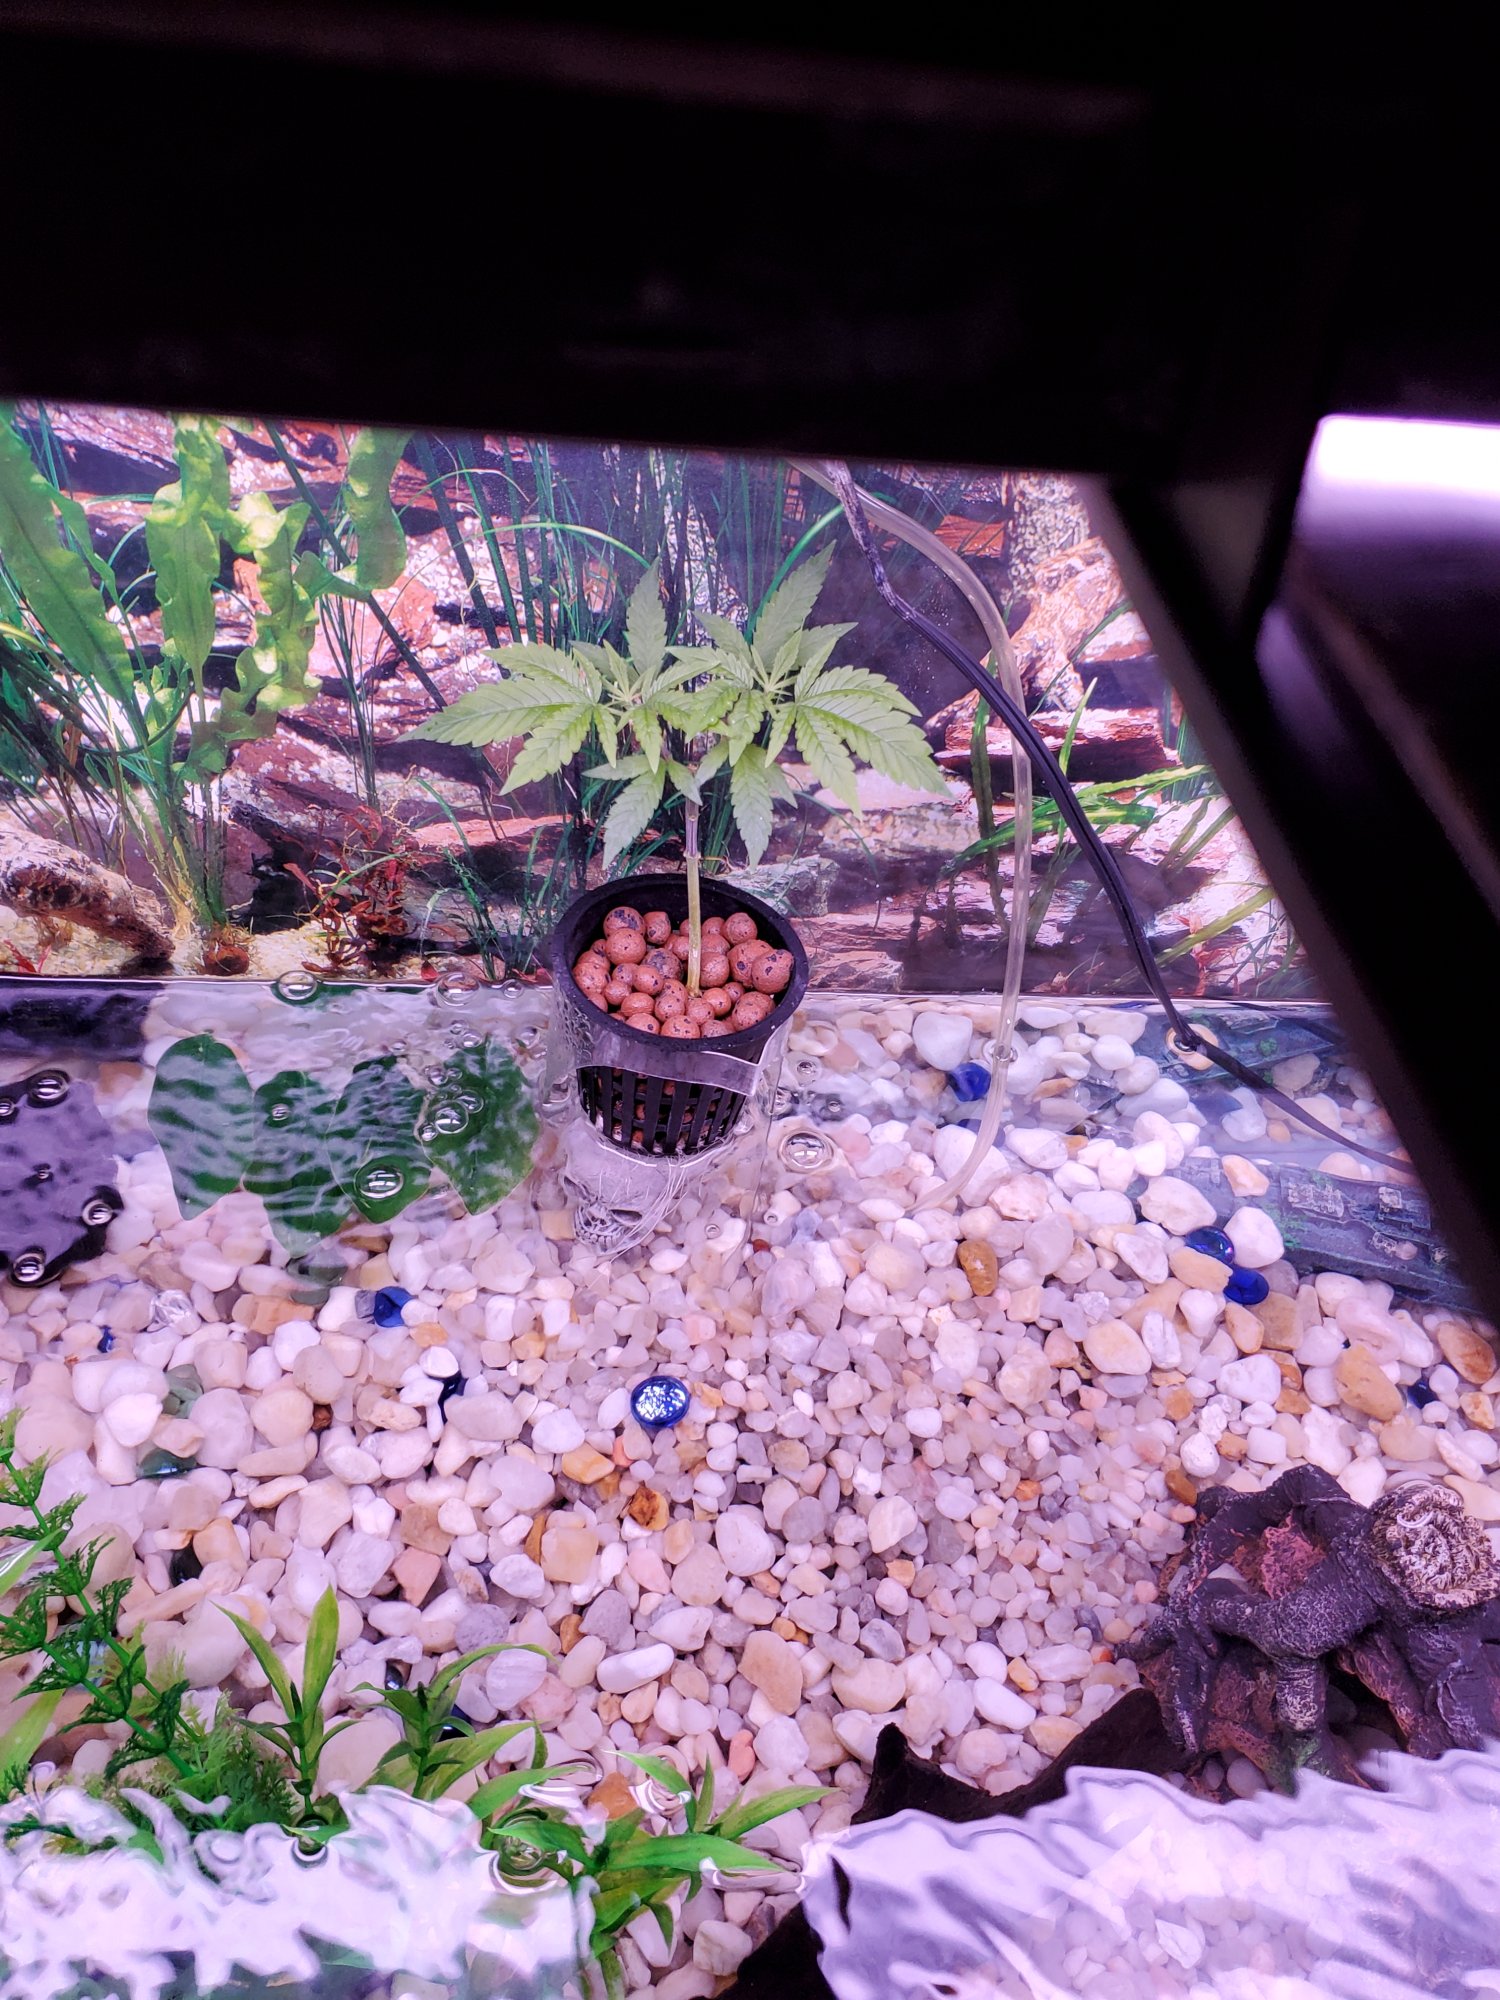 Using a fish tank as a nursery